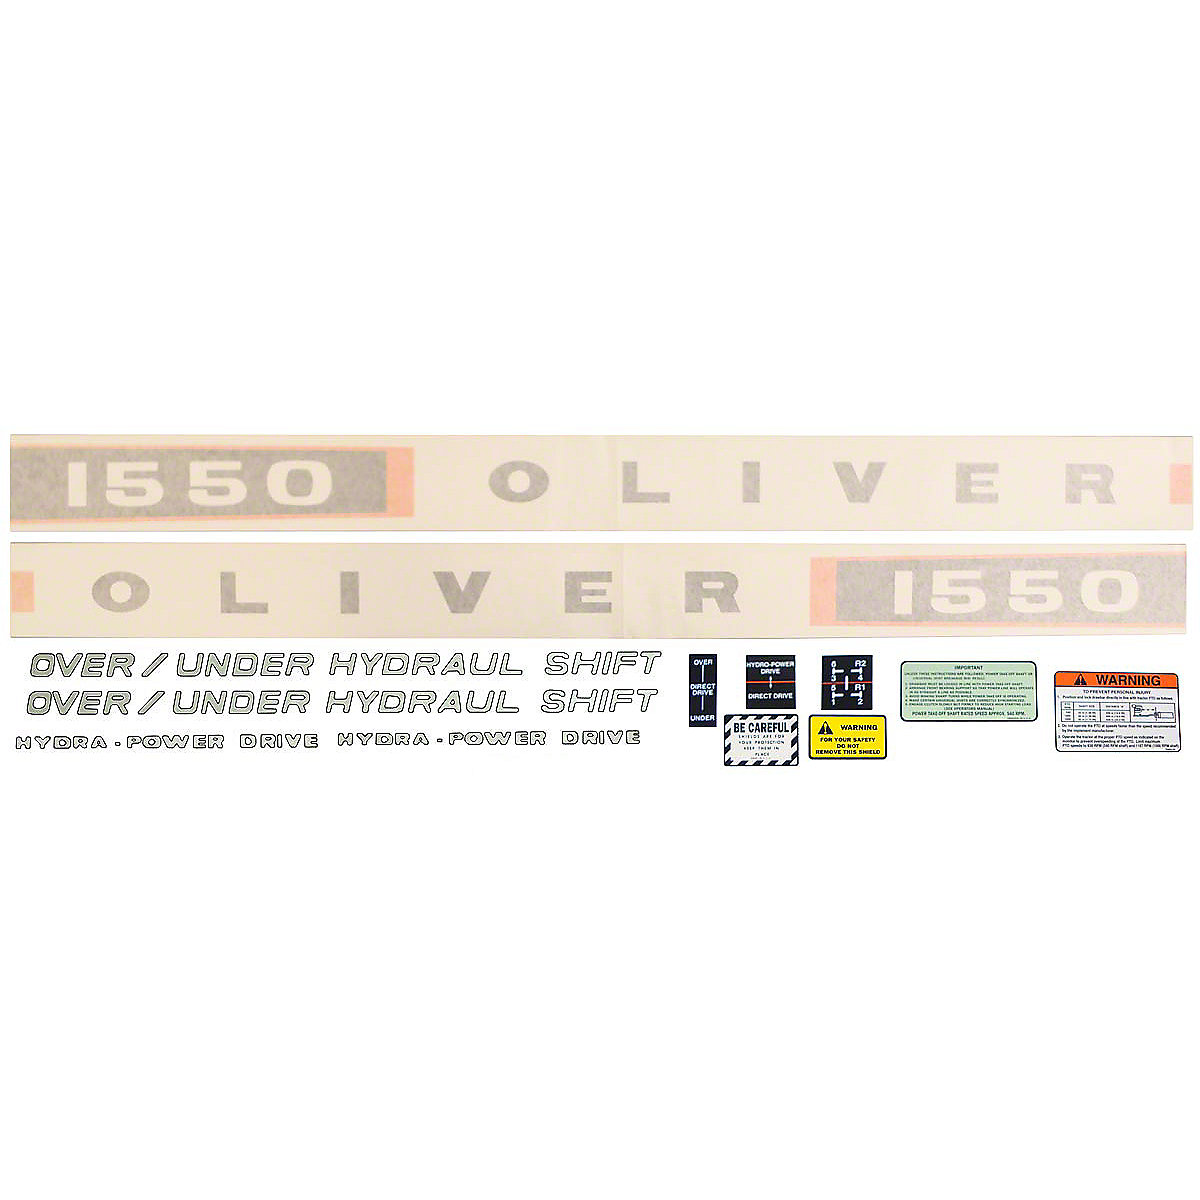 Vinyl Decal Set For Oliver 1550 Tractors.